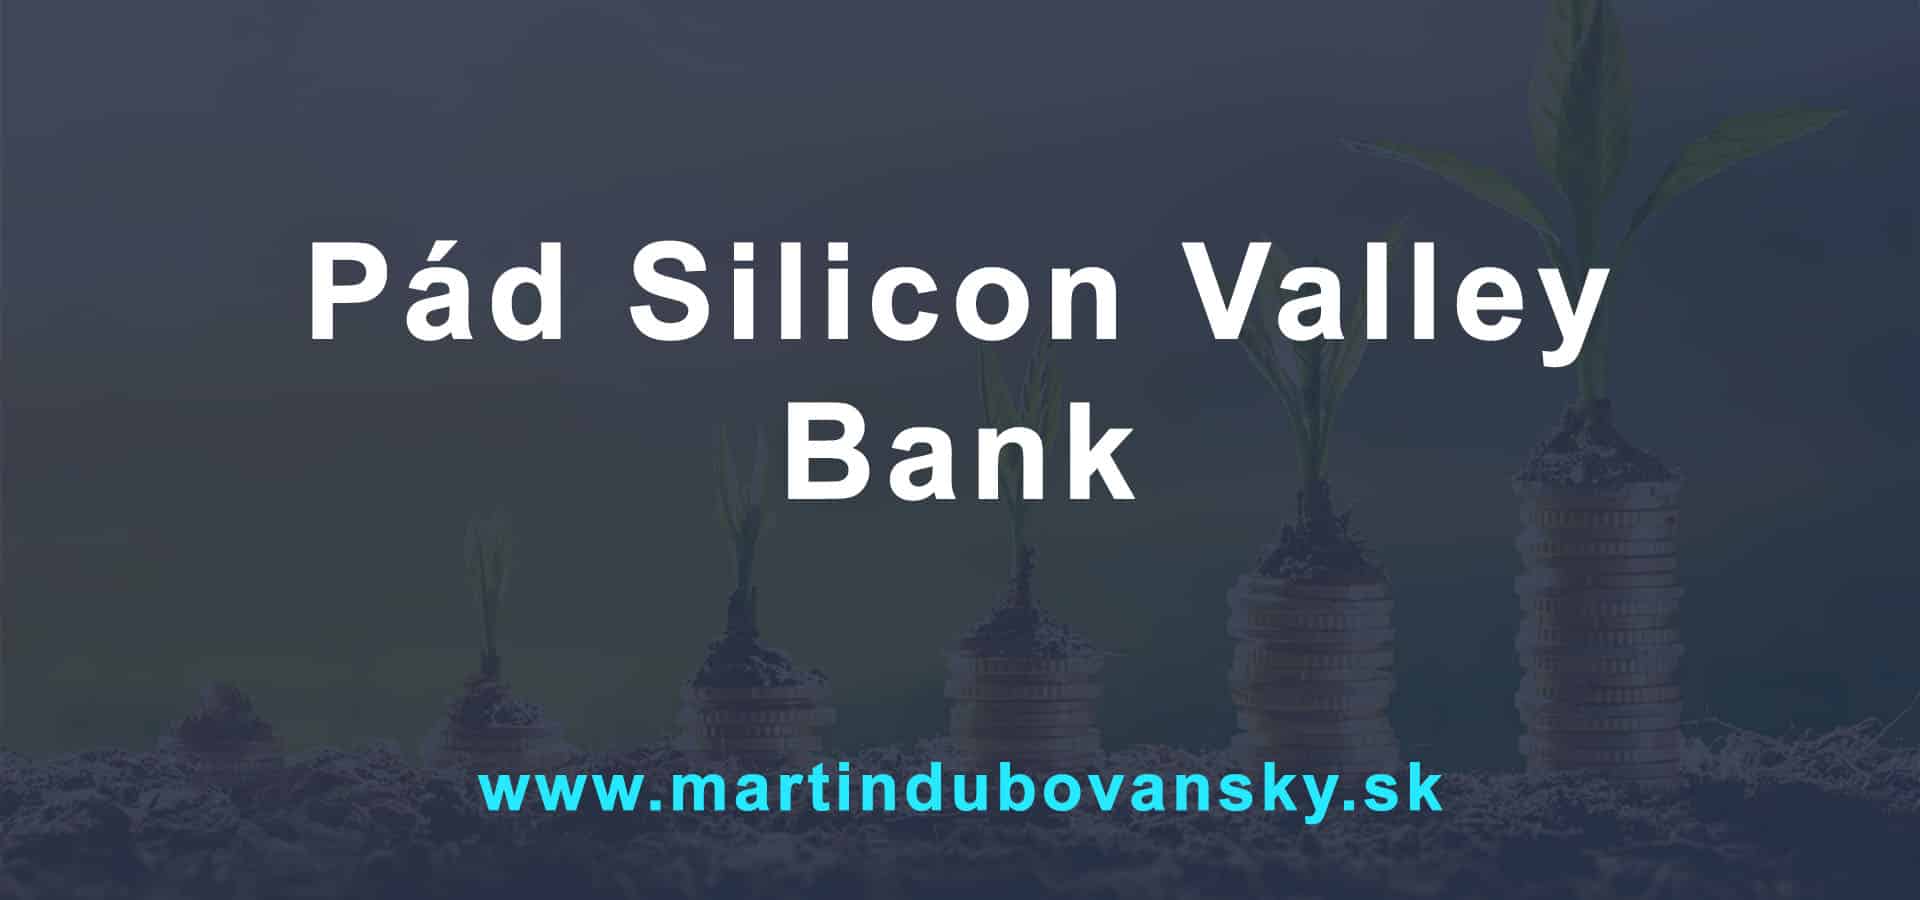 Pád Silicon Valley Bank